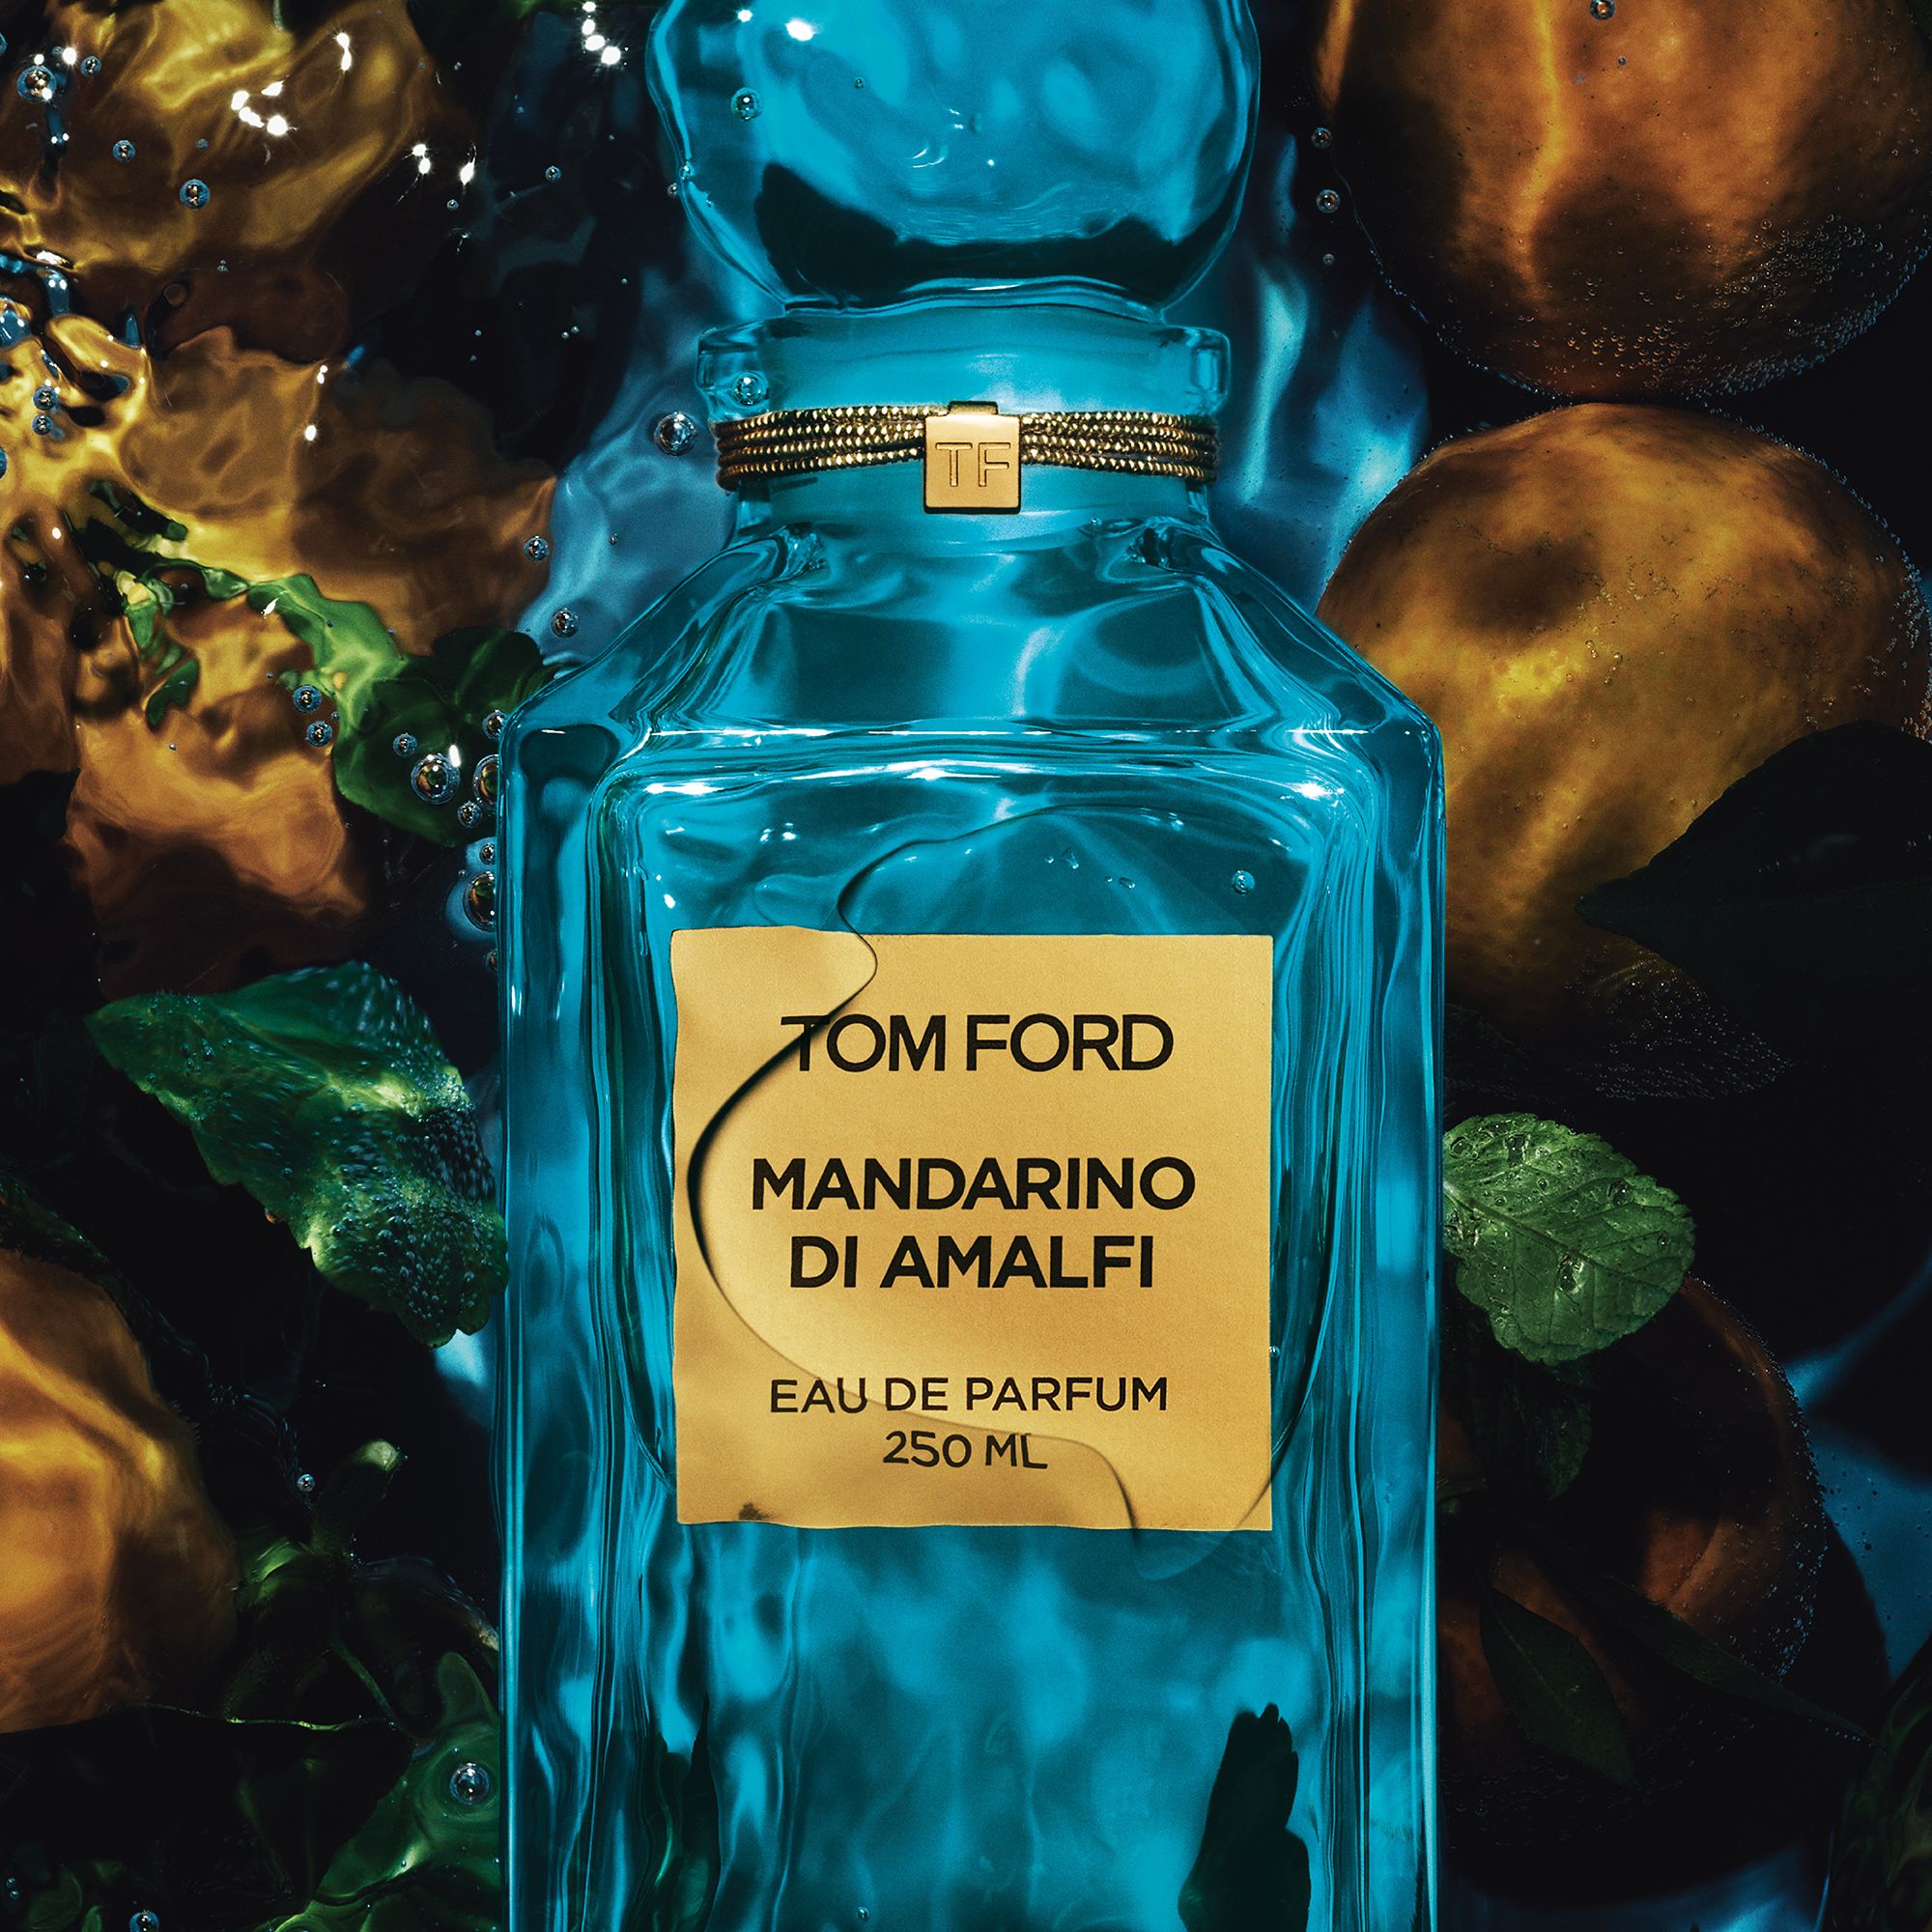 TOM FORD Private Blend Mandarino Di Amalfi Eau de Parfum, 50ml at John ...